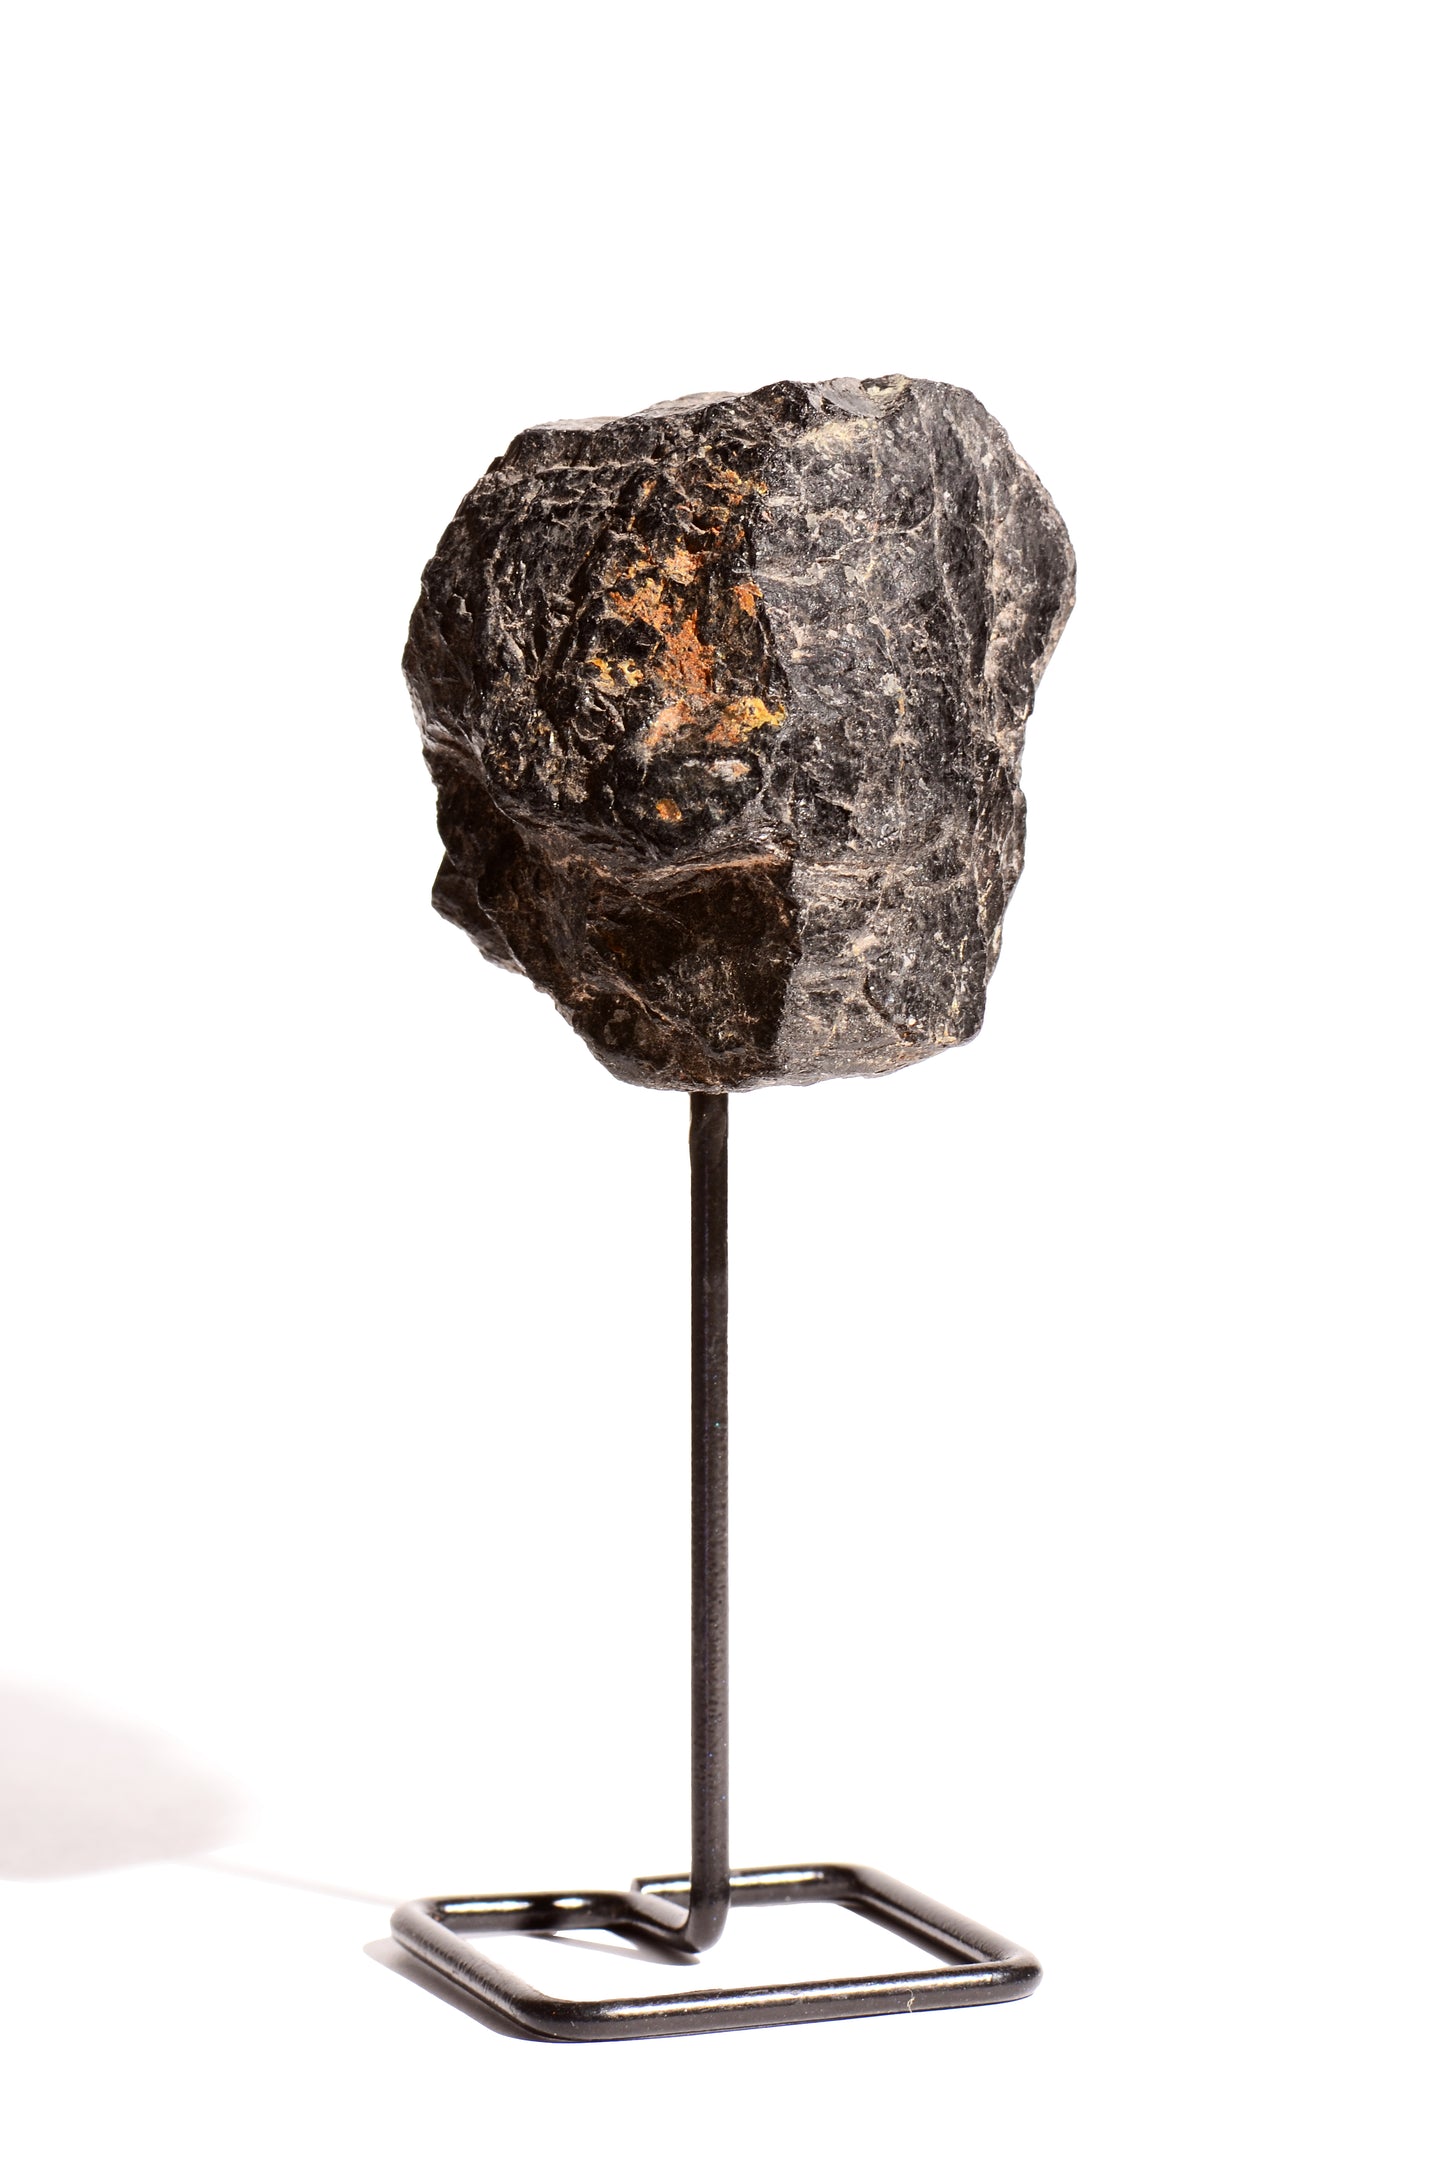 healing crystals: raw black tourmaline on pin stand